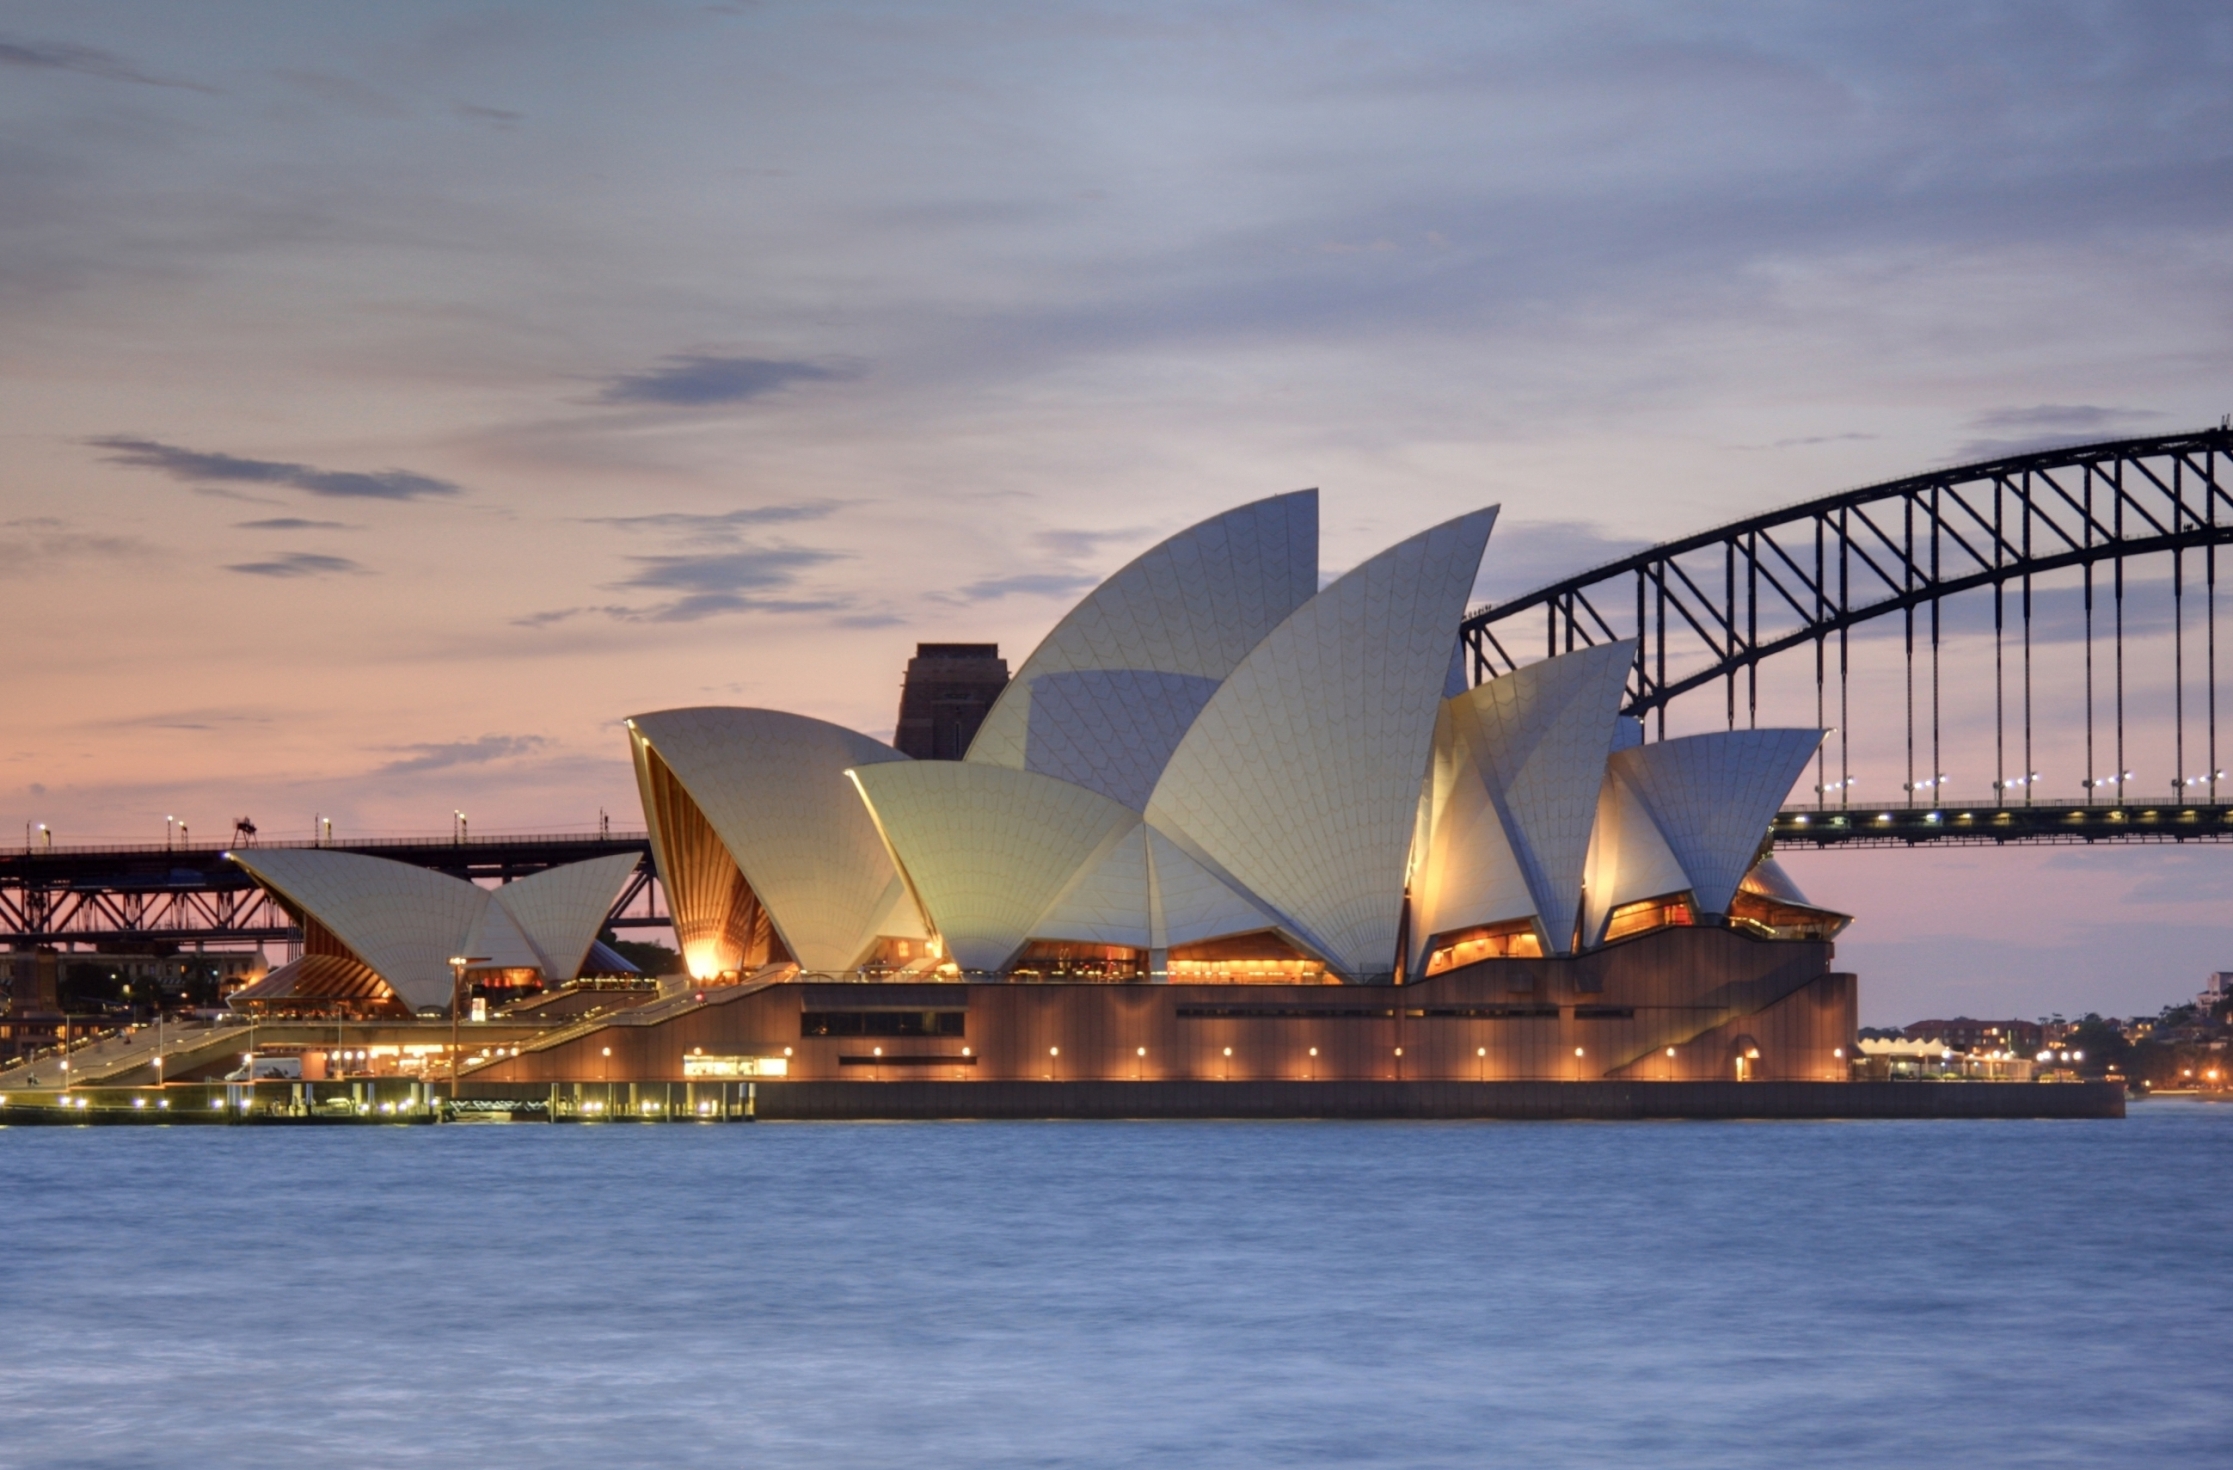 The beautiful Sydney Opera House